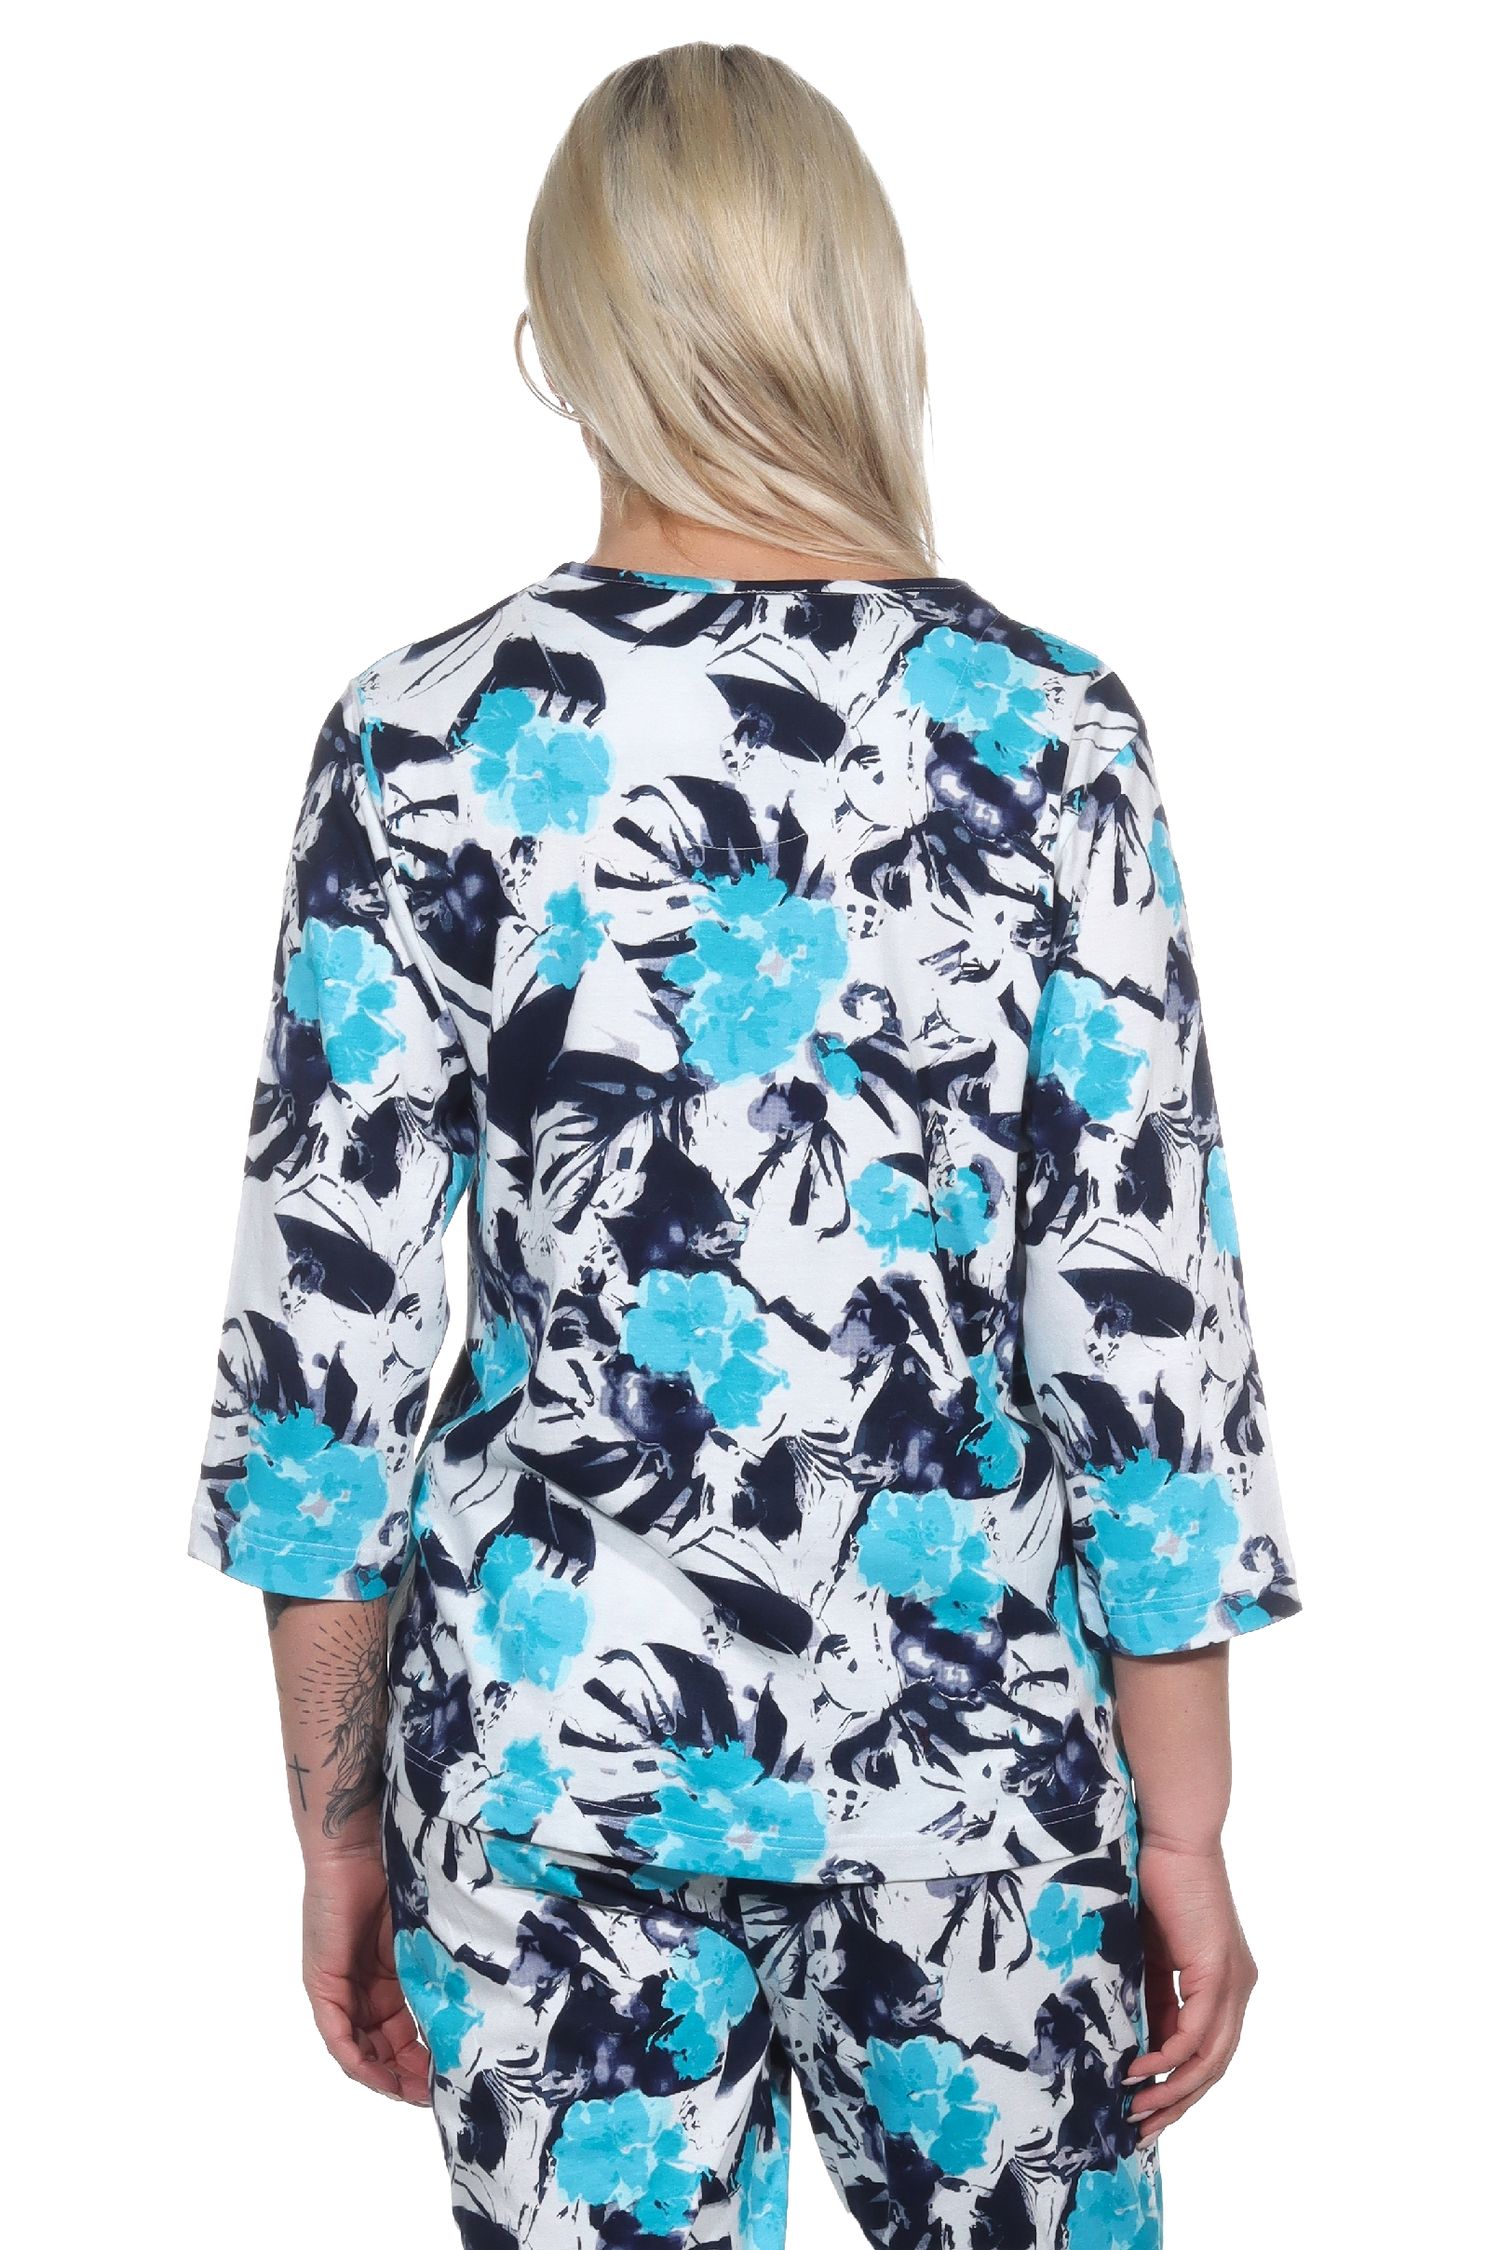 Damen Schlafanzug Shirt langarm Pyjama Oberteil Mix & Match in floraler Optik